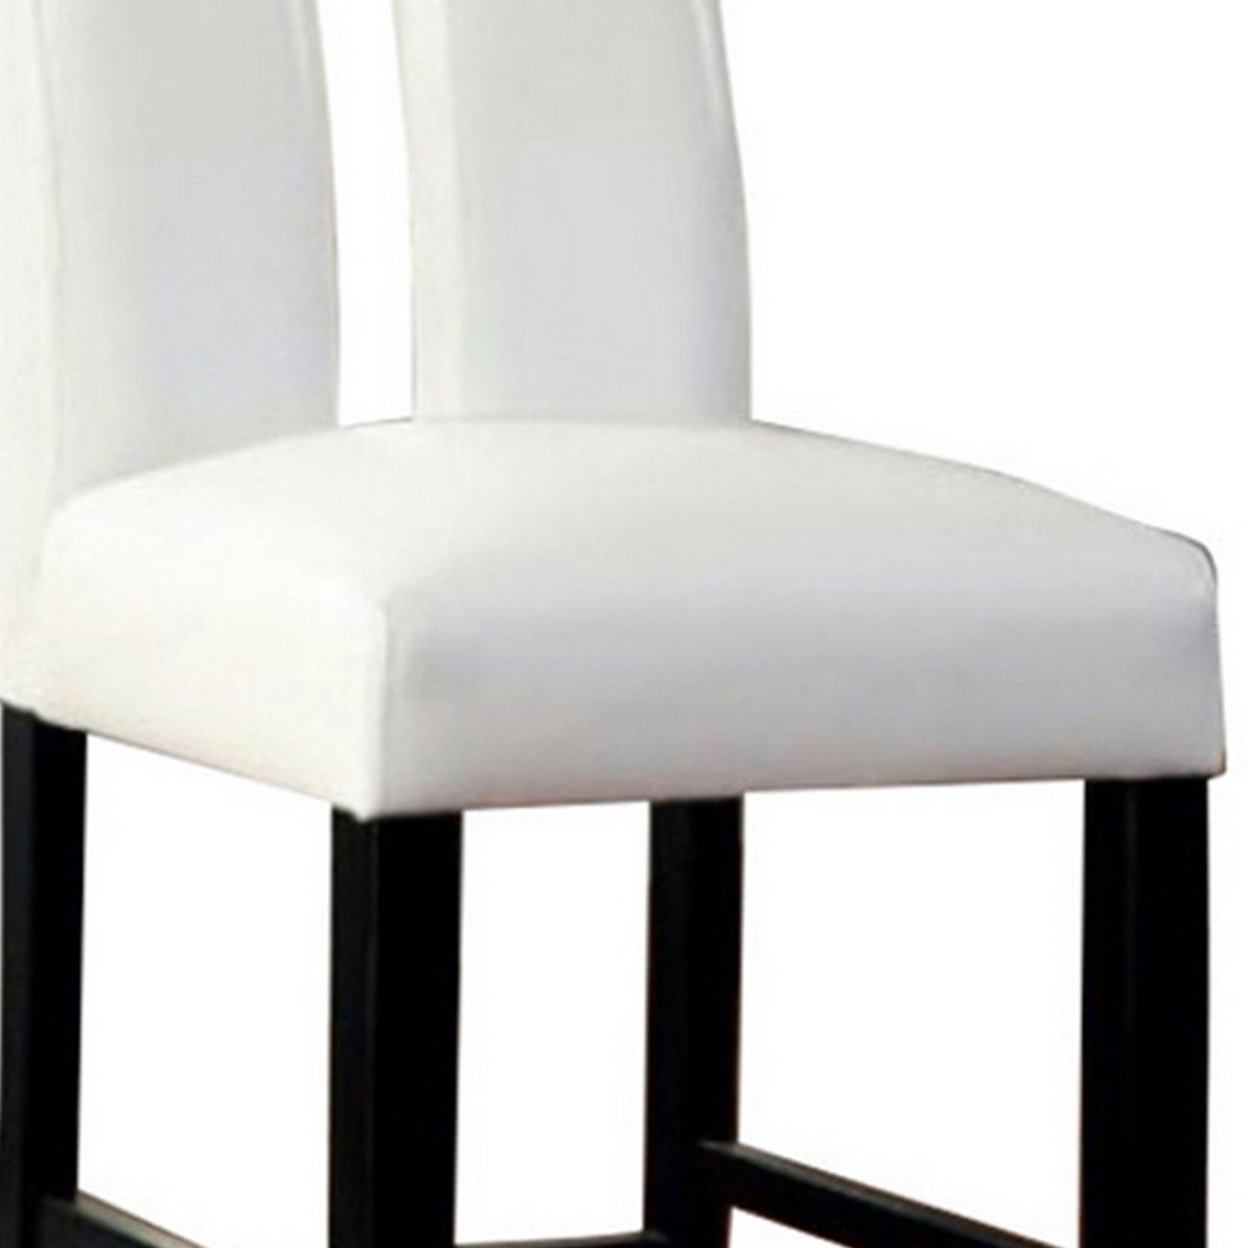 Luminar II Contemporary Counter Height Chair, White And Black Finish, Set Of 2- Saltoro Sherpi